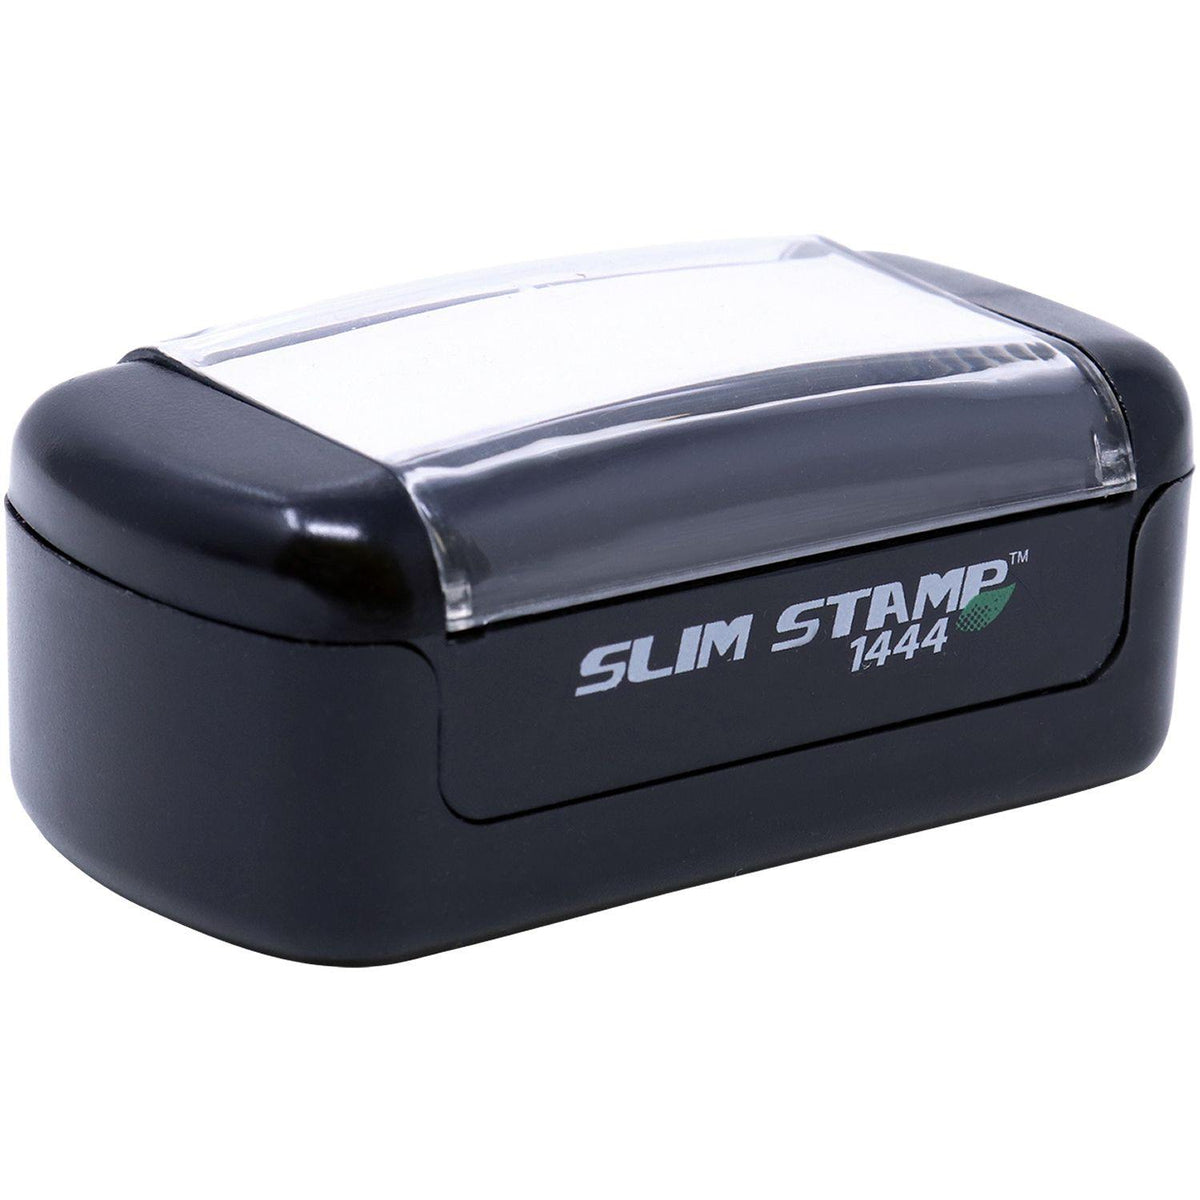 Alt View of Slim Pre-Inked SAM Stamp Mount Angle